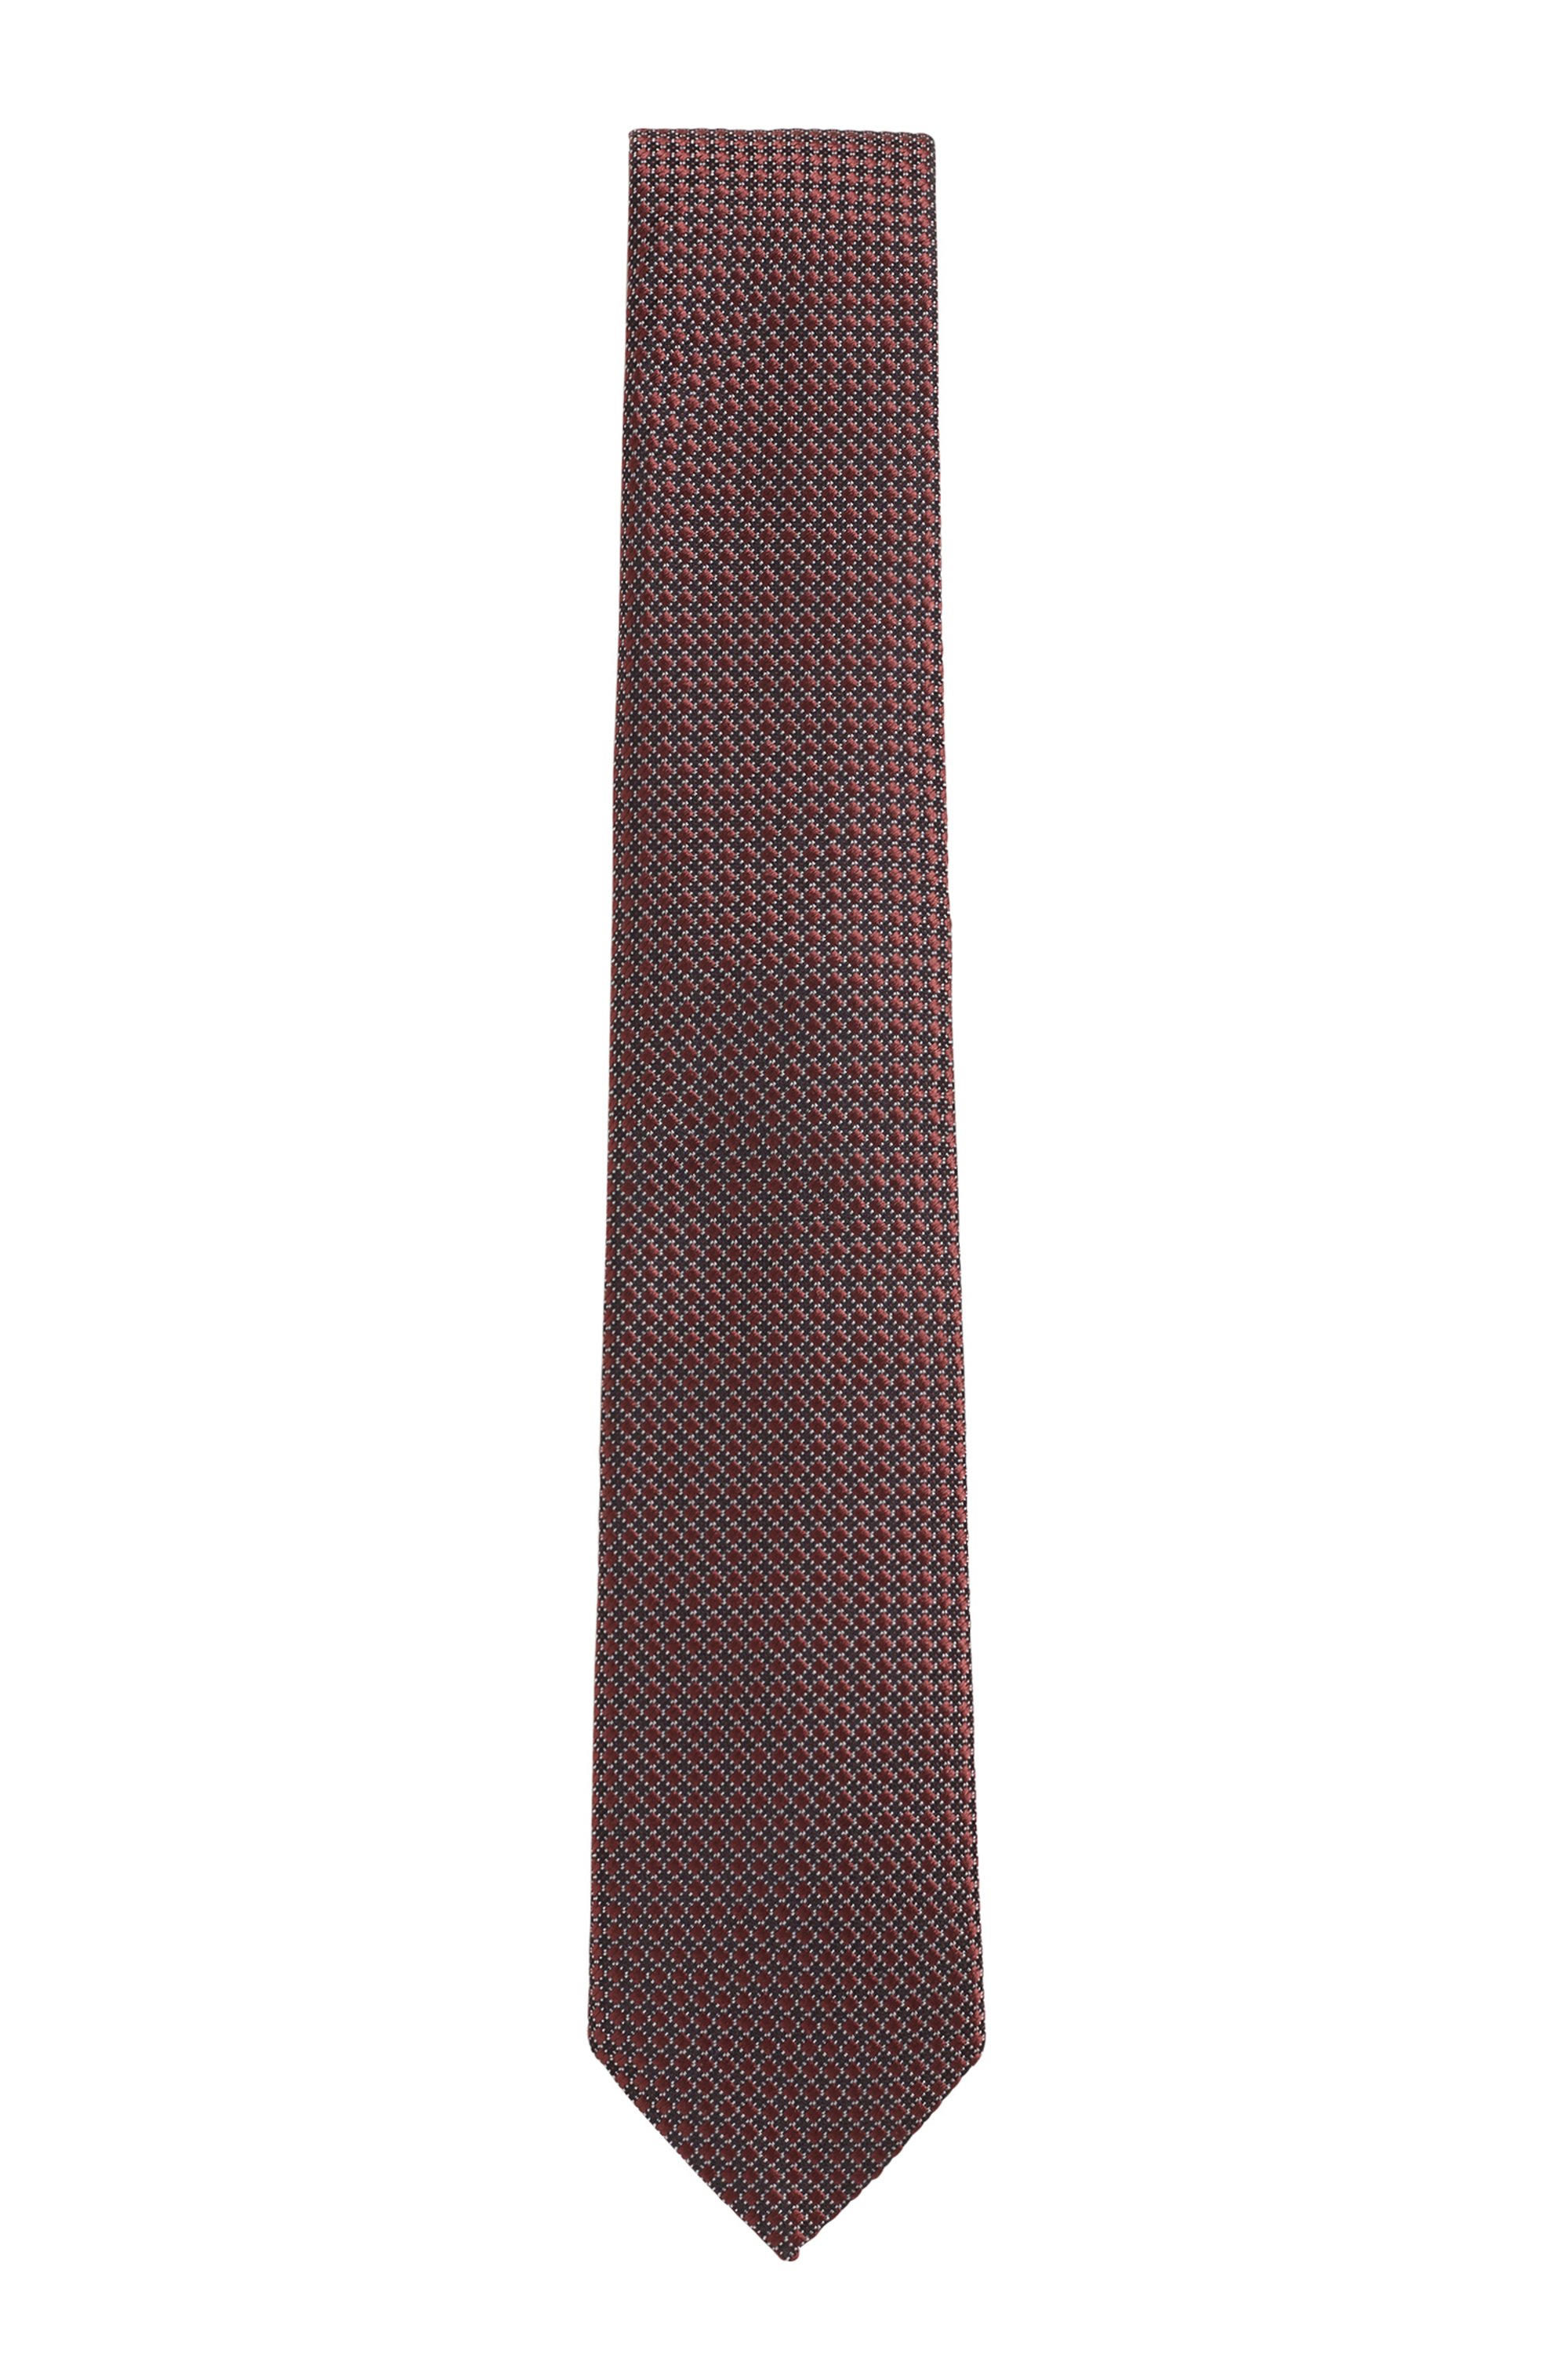 Gemusterte Krawatte aus Seiden-Jacquard, Dunkelbraun